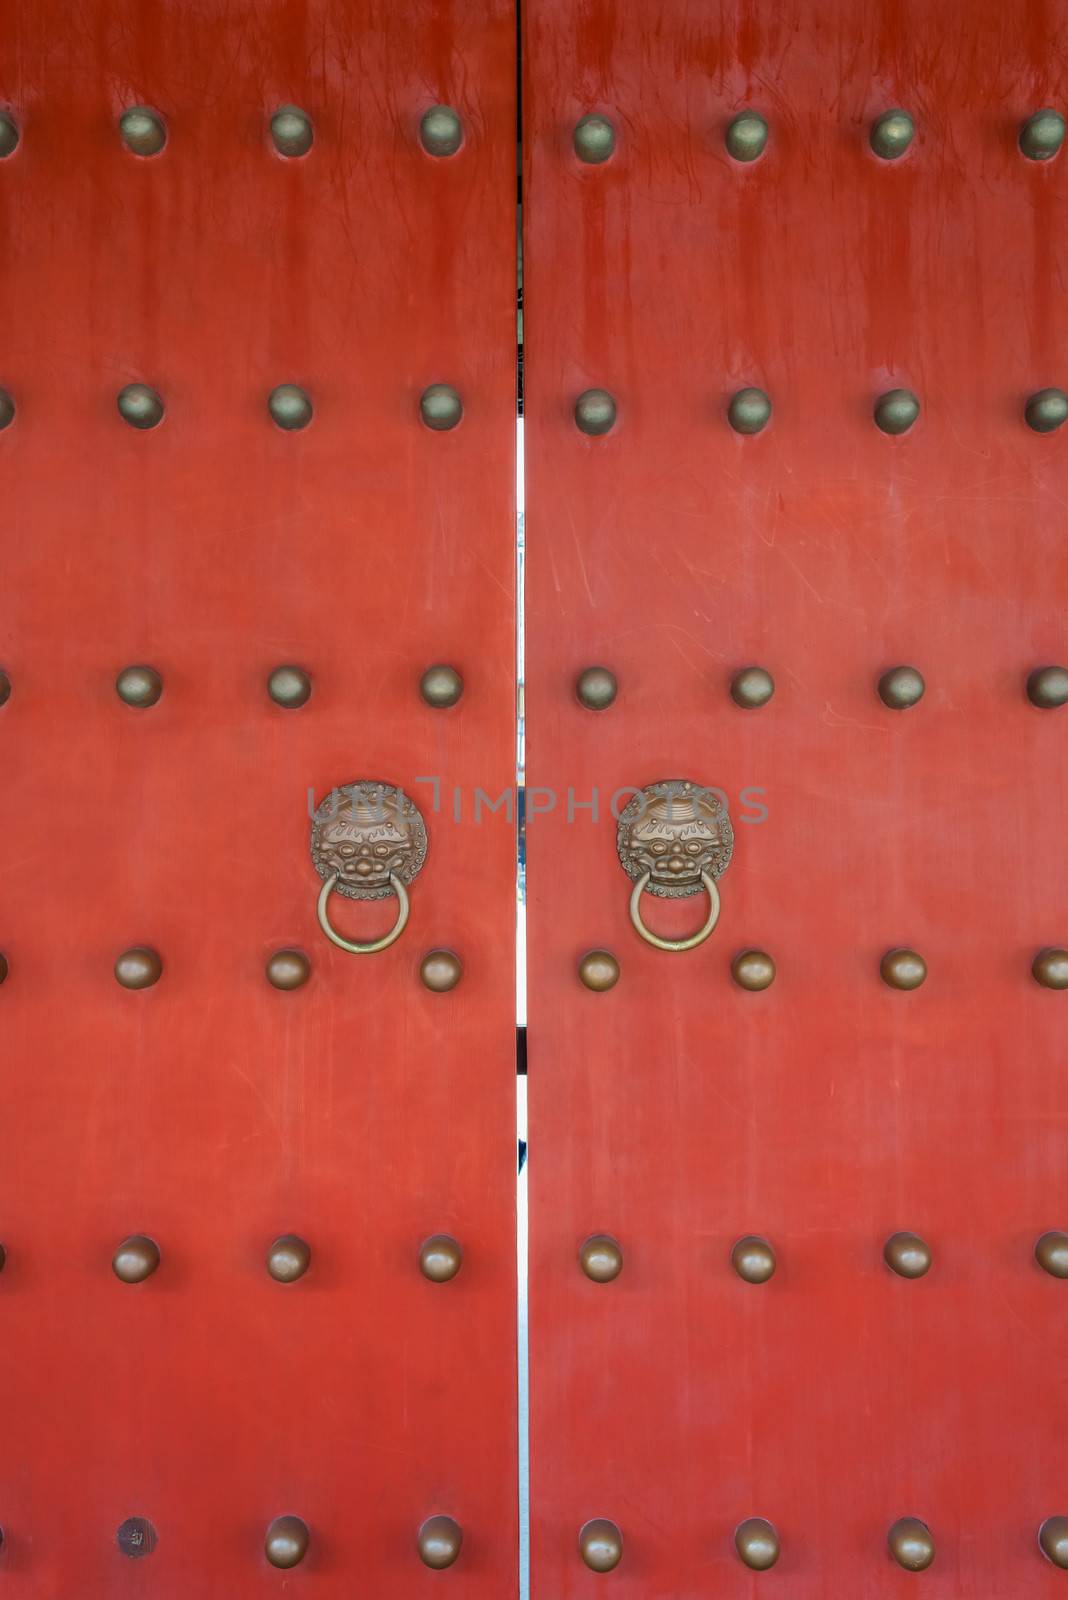 red doors detail of Wen Miao confucian confucius temple in shanghai china popular republic